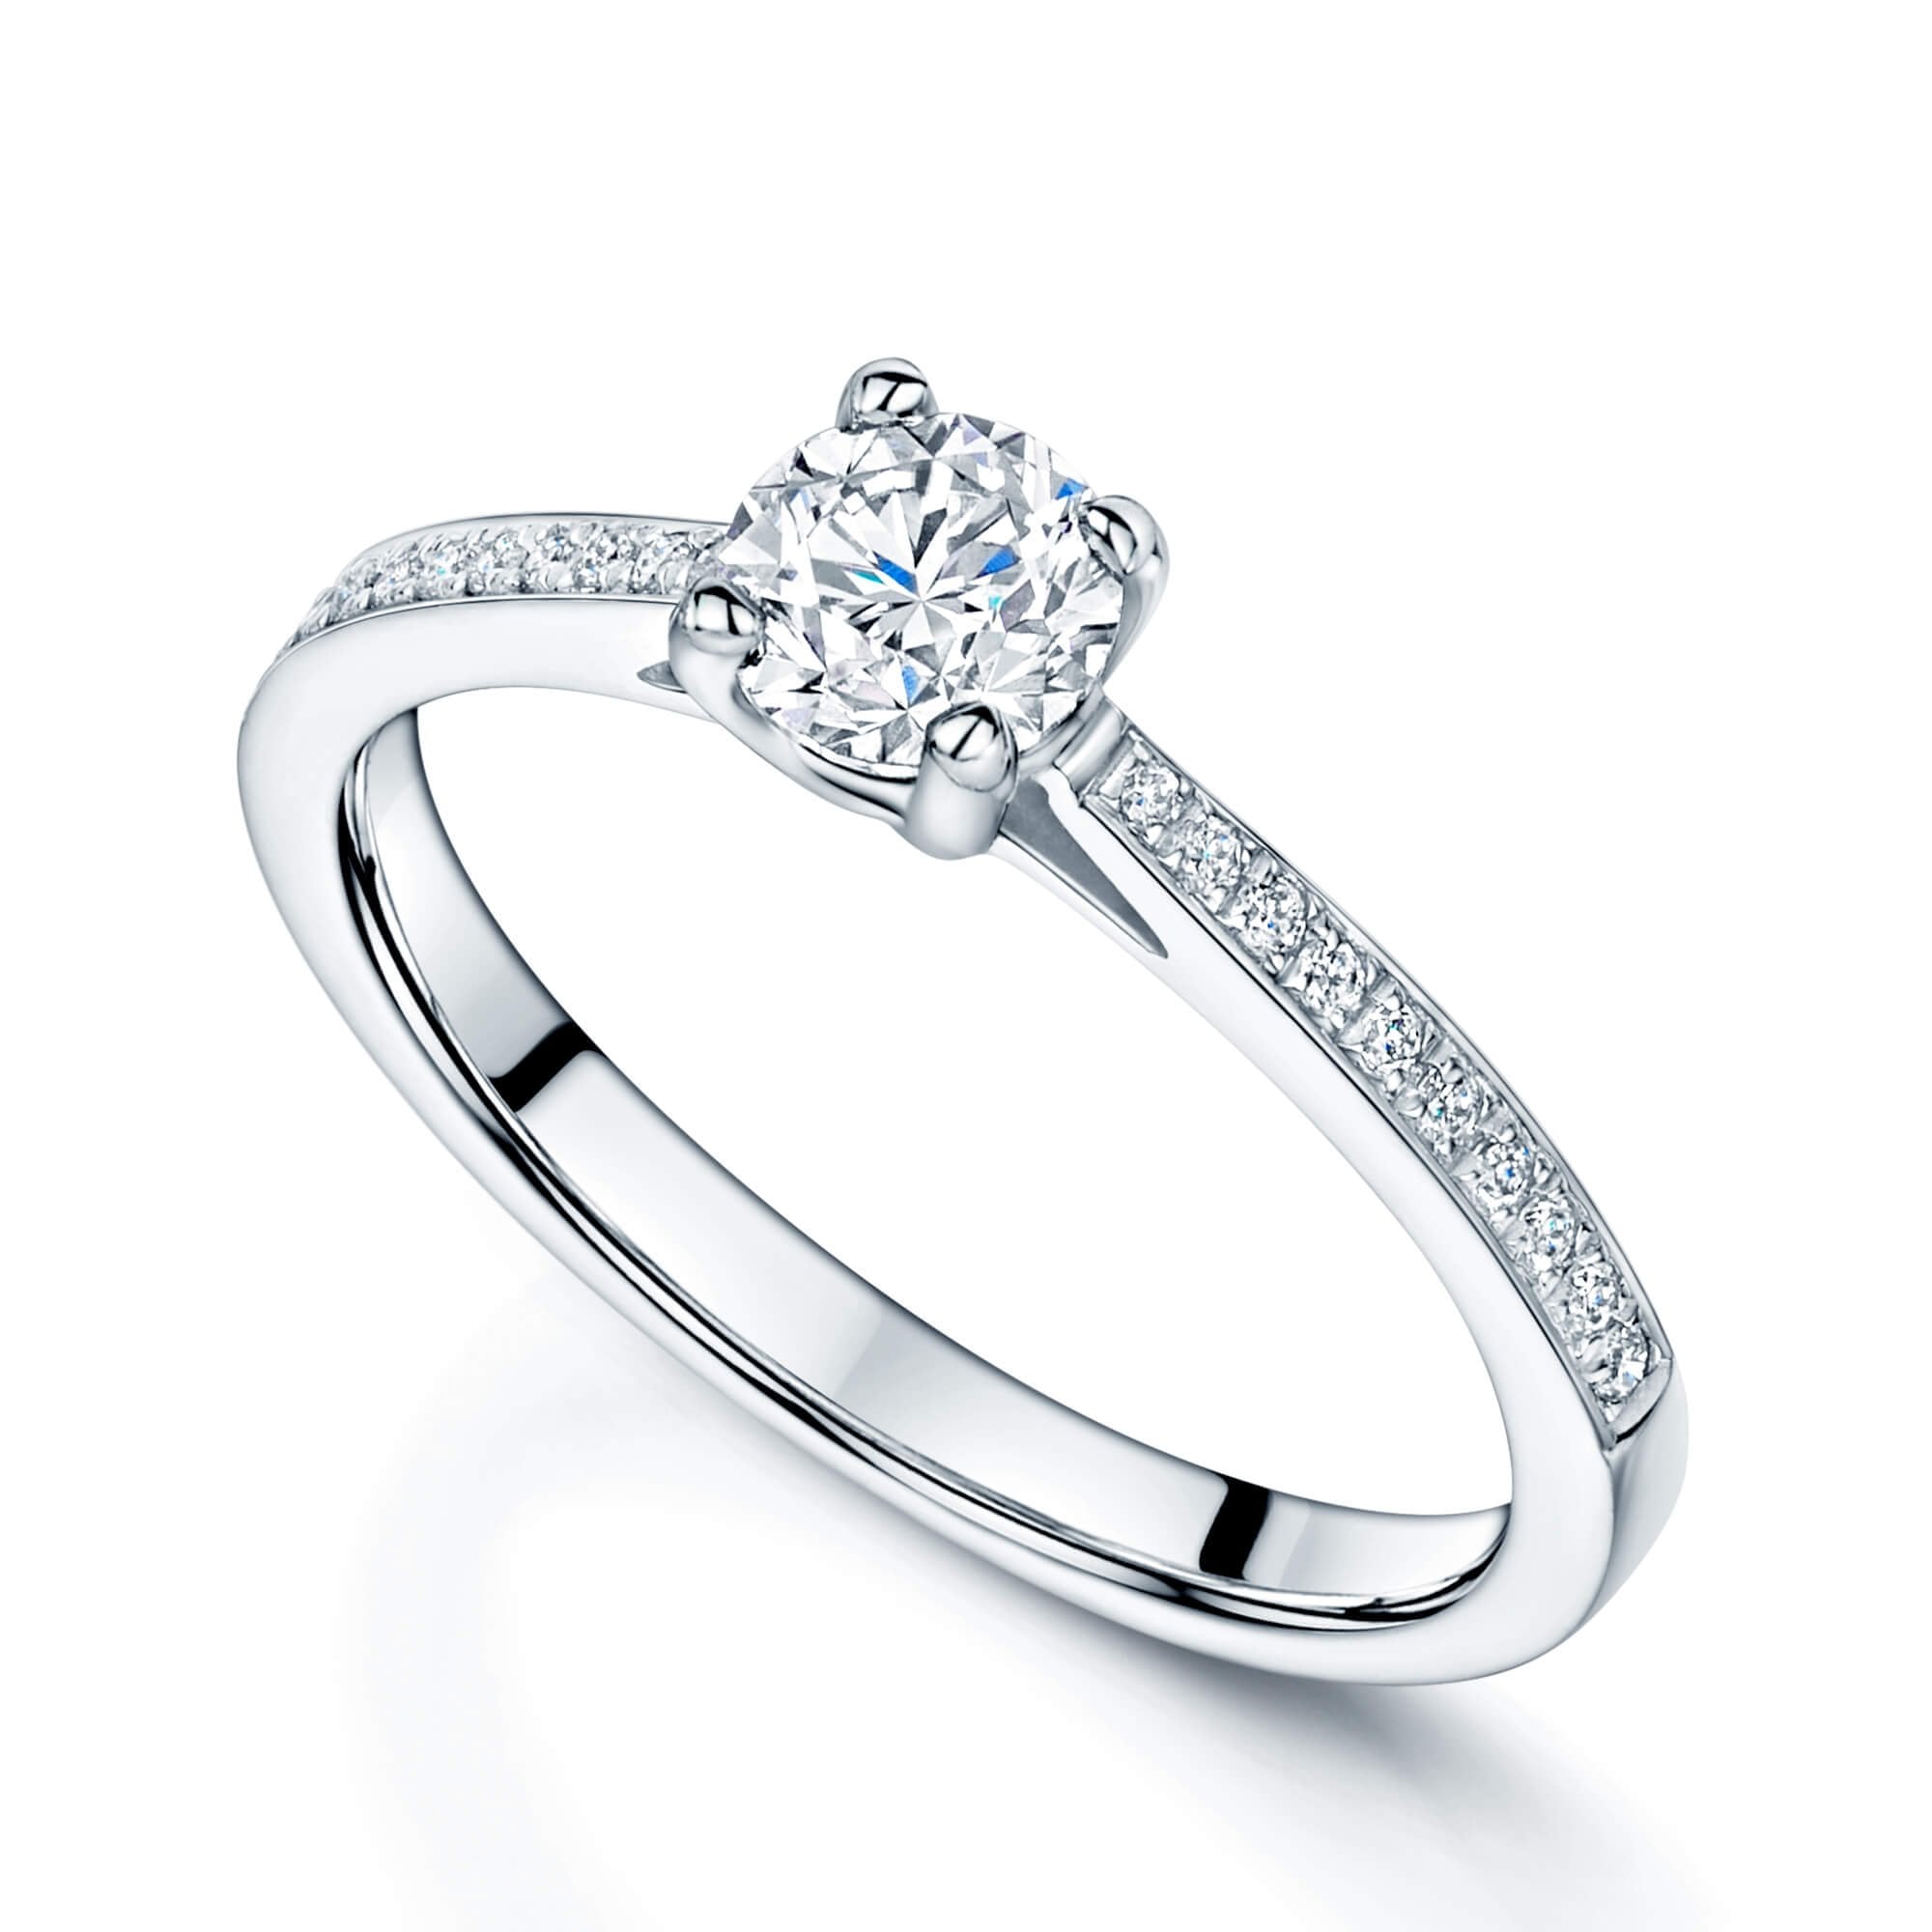 Platinum GIA Certificated 0.51ct Round Brilliant Cut Diamond Ring With 0.10ct Diamond Set Shoulders